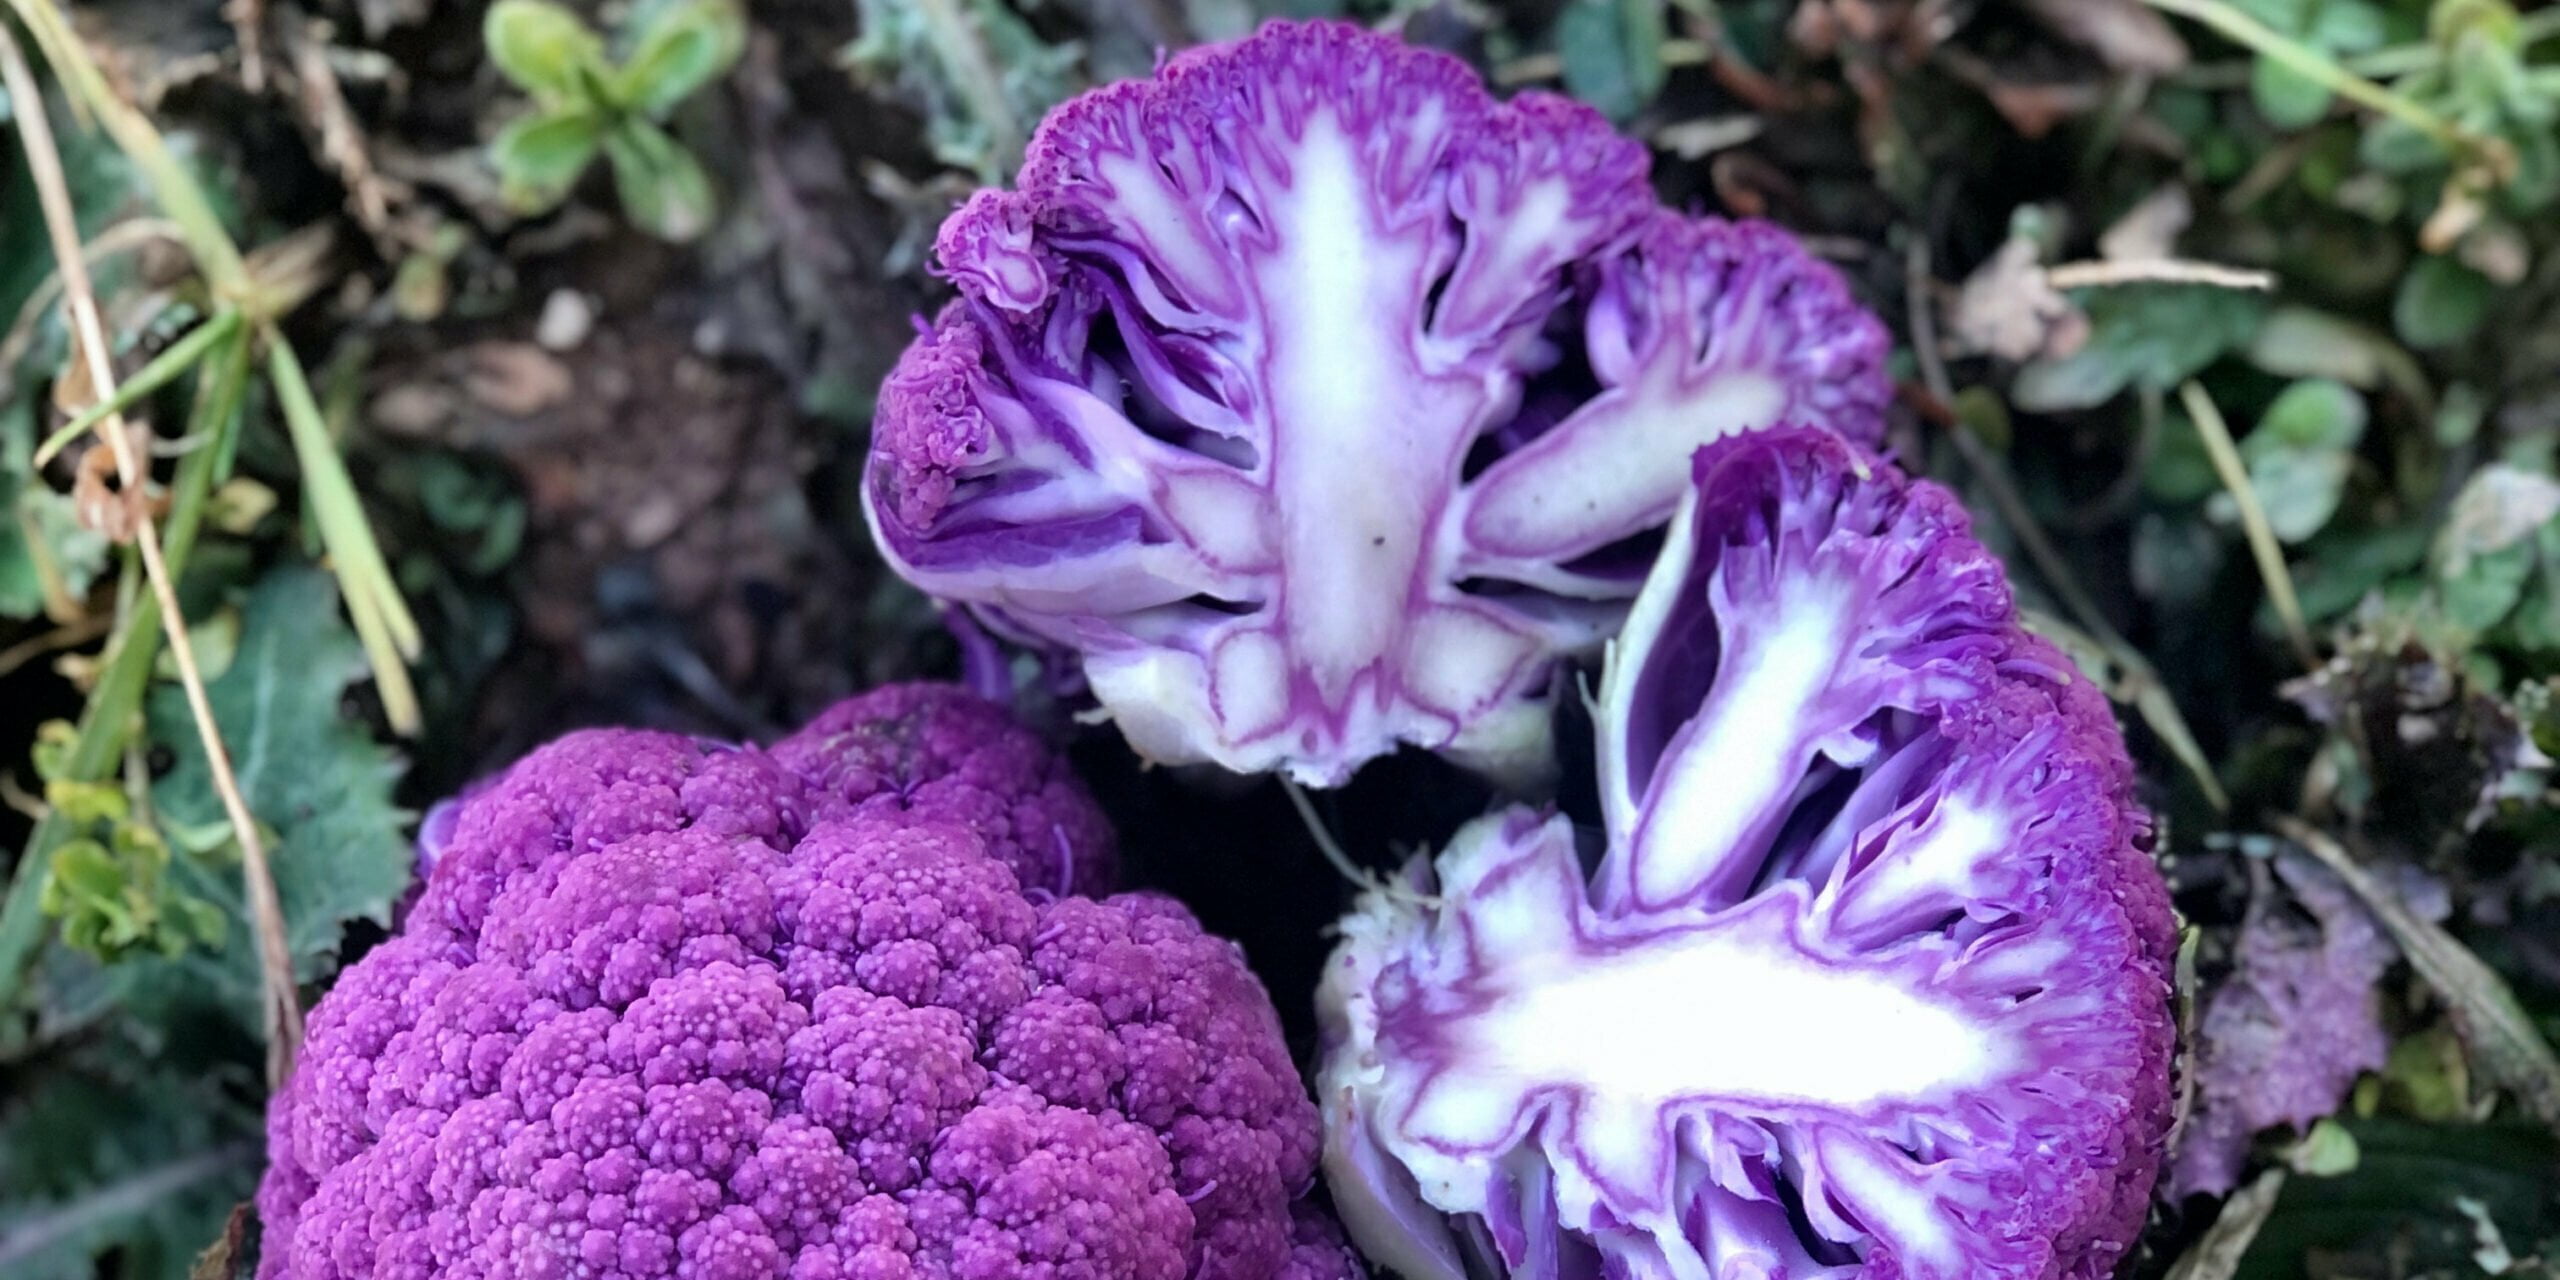 purple cauliflower from Olivette Farm